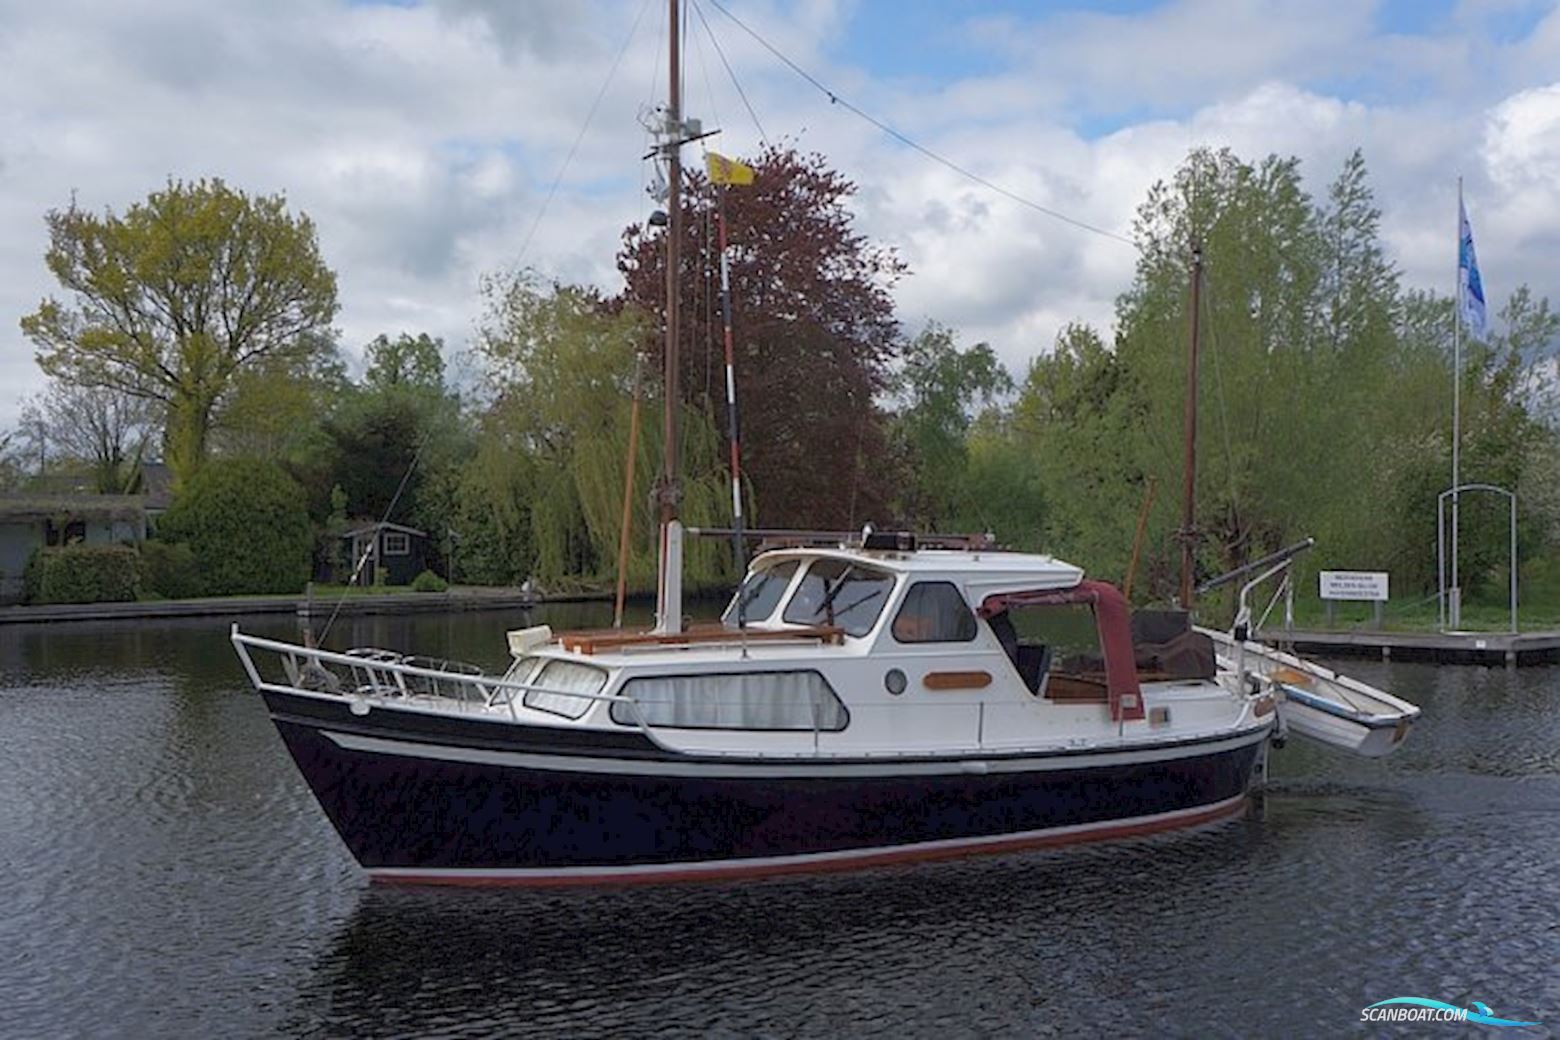 Plantinga Kotter Motor boat 1968, with Perkins engine, The Netherlands